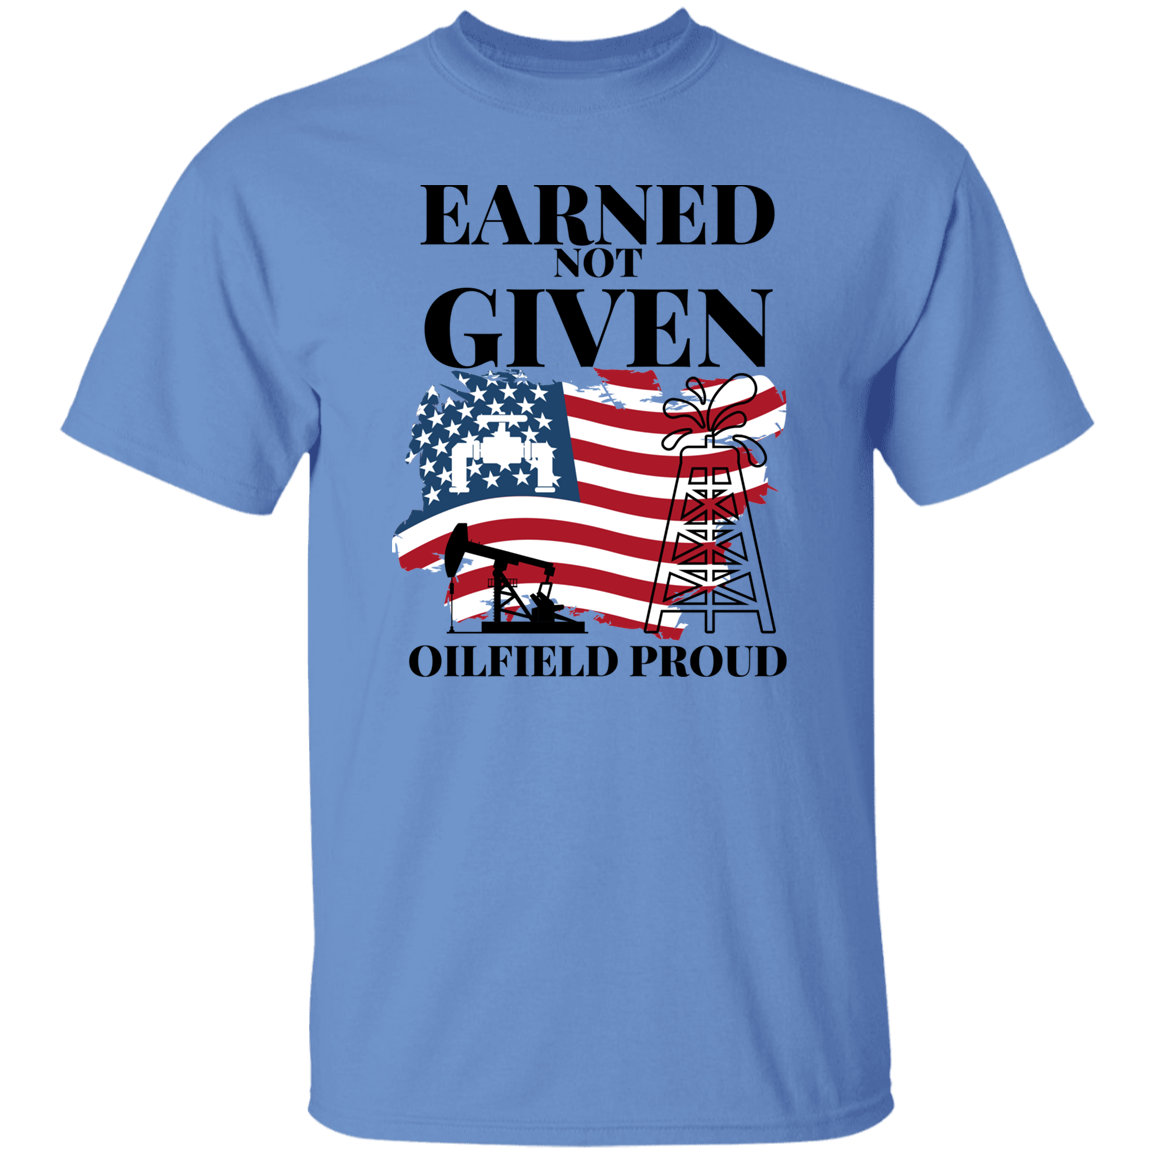 Oilfield Proud T-Shirt